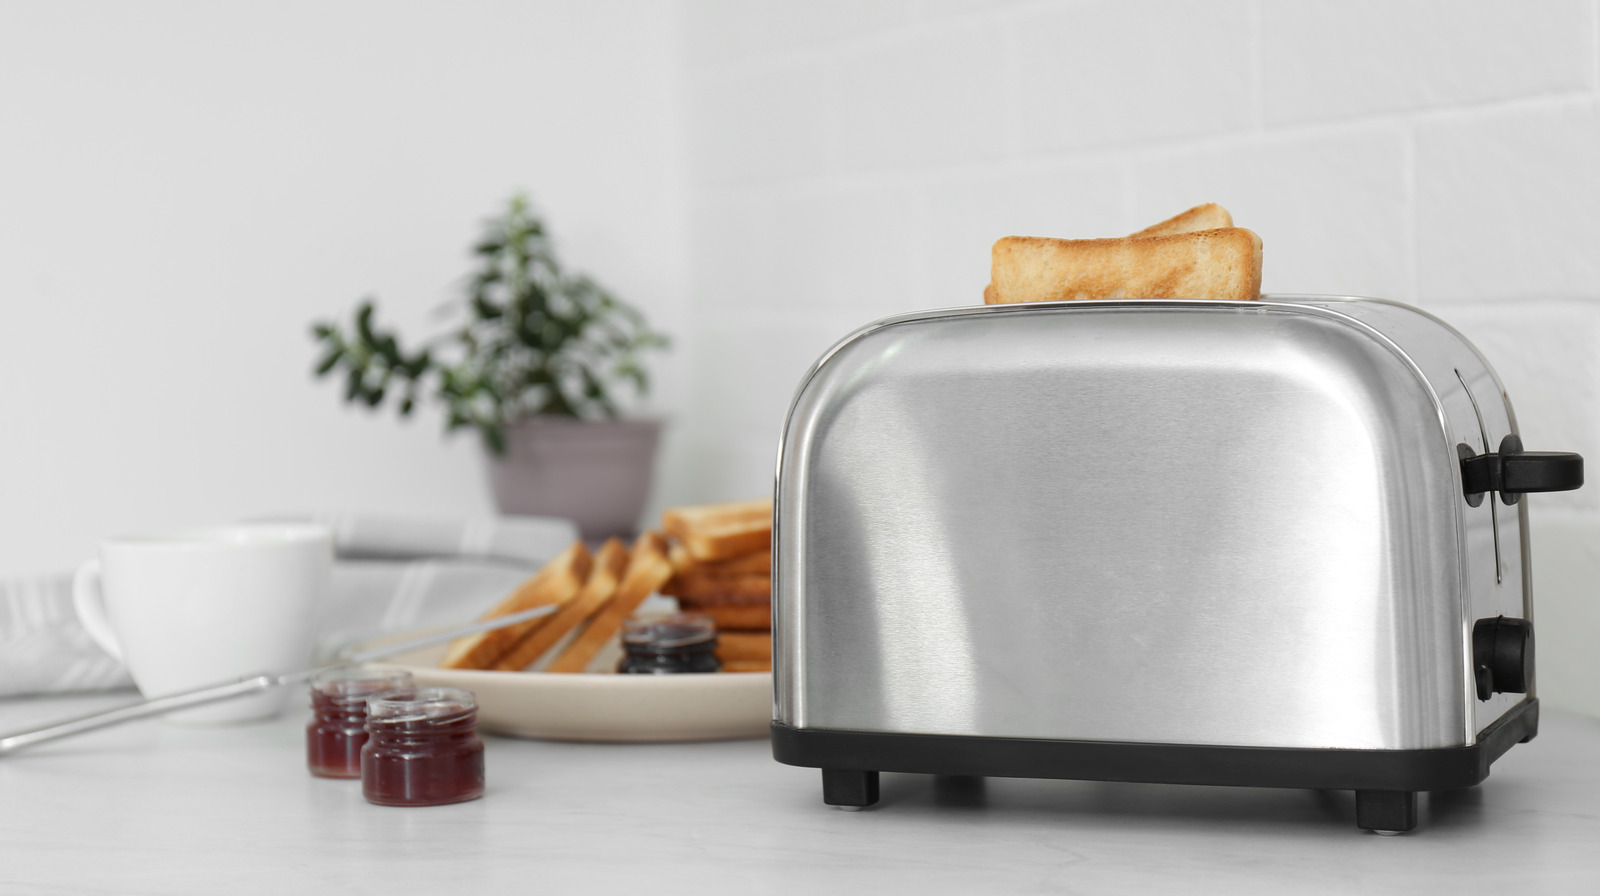 https://www.tastingtable.com/img/gallery/8-best-toaster-brands-ranked/l-intro-1657115773.jpg